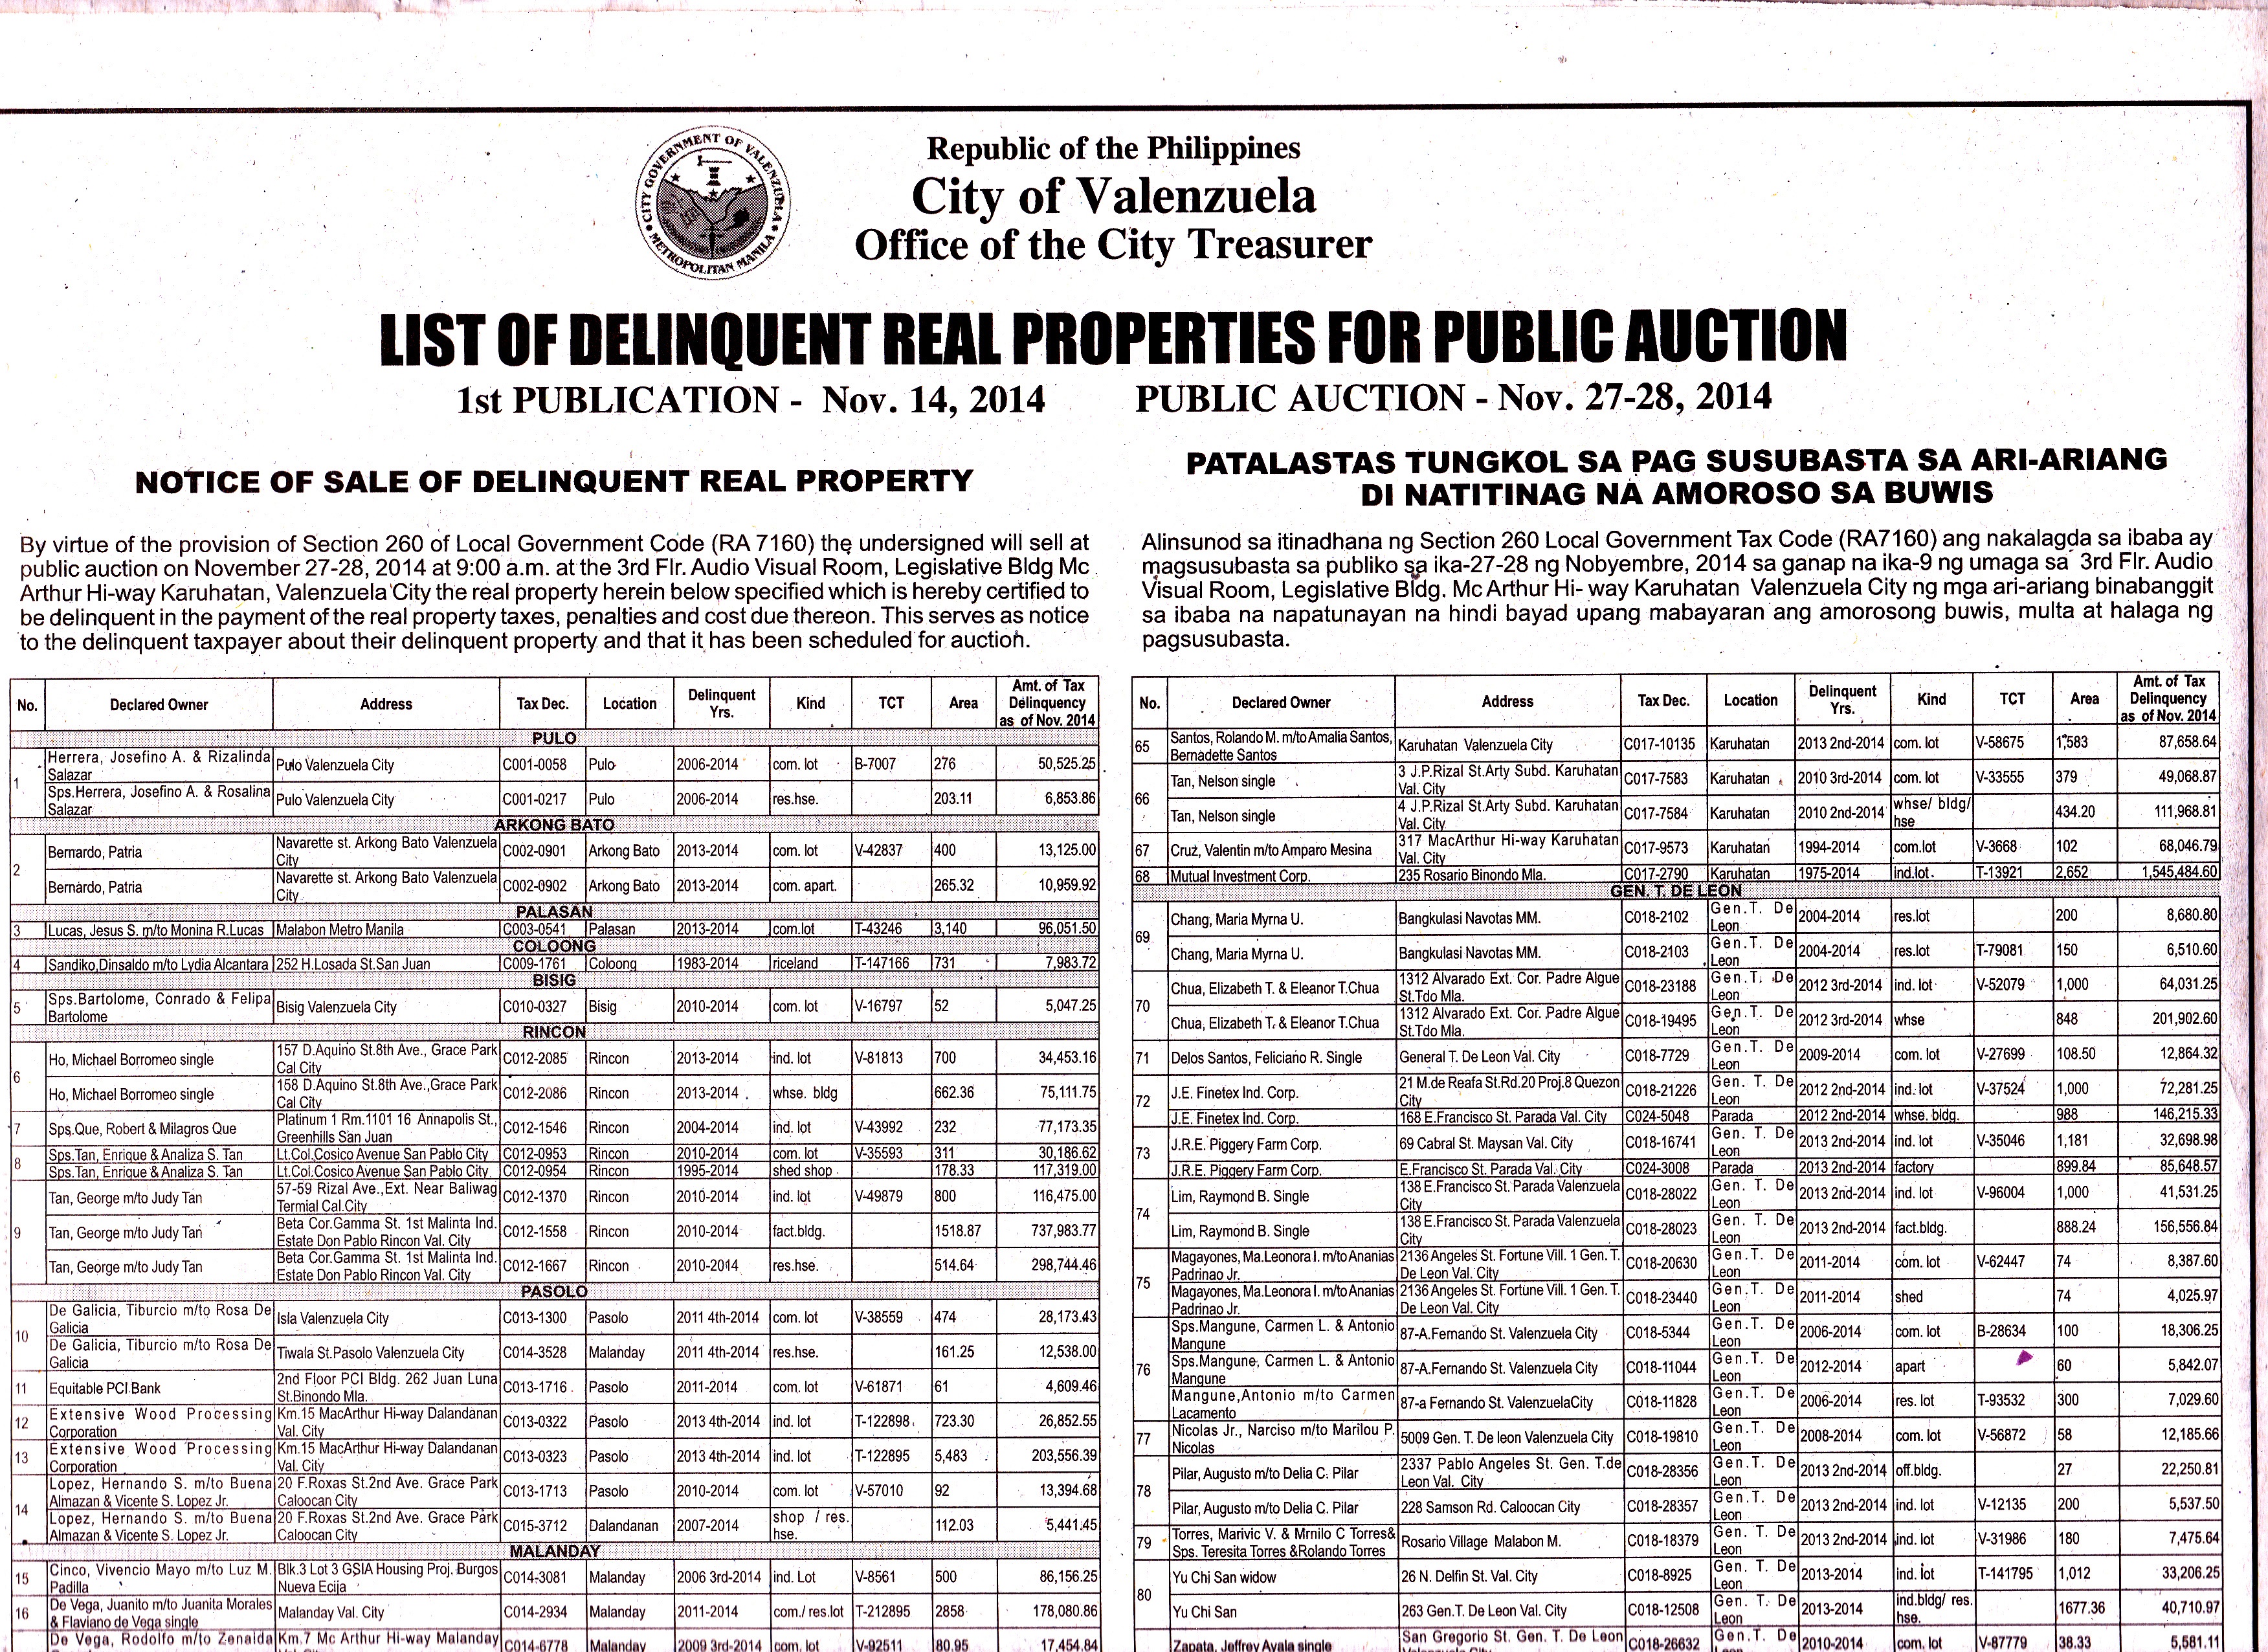 Notice of auction by Valenzuela city hall.jpg